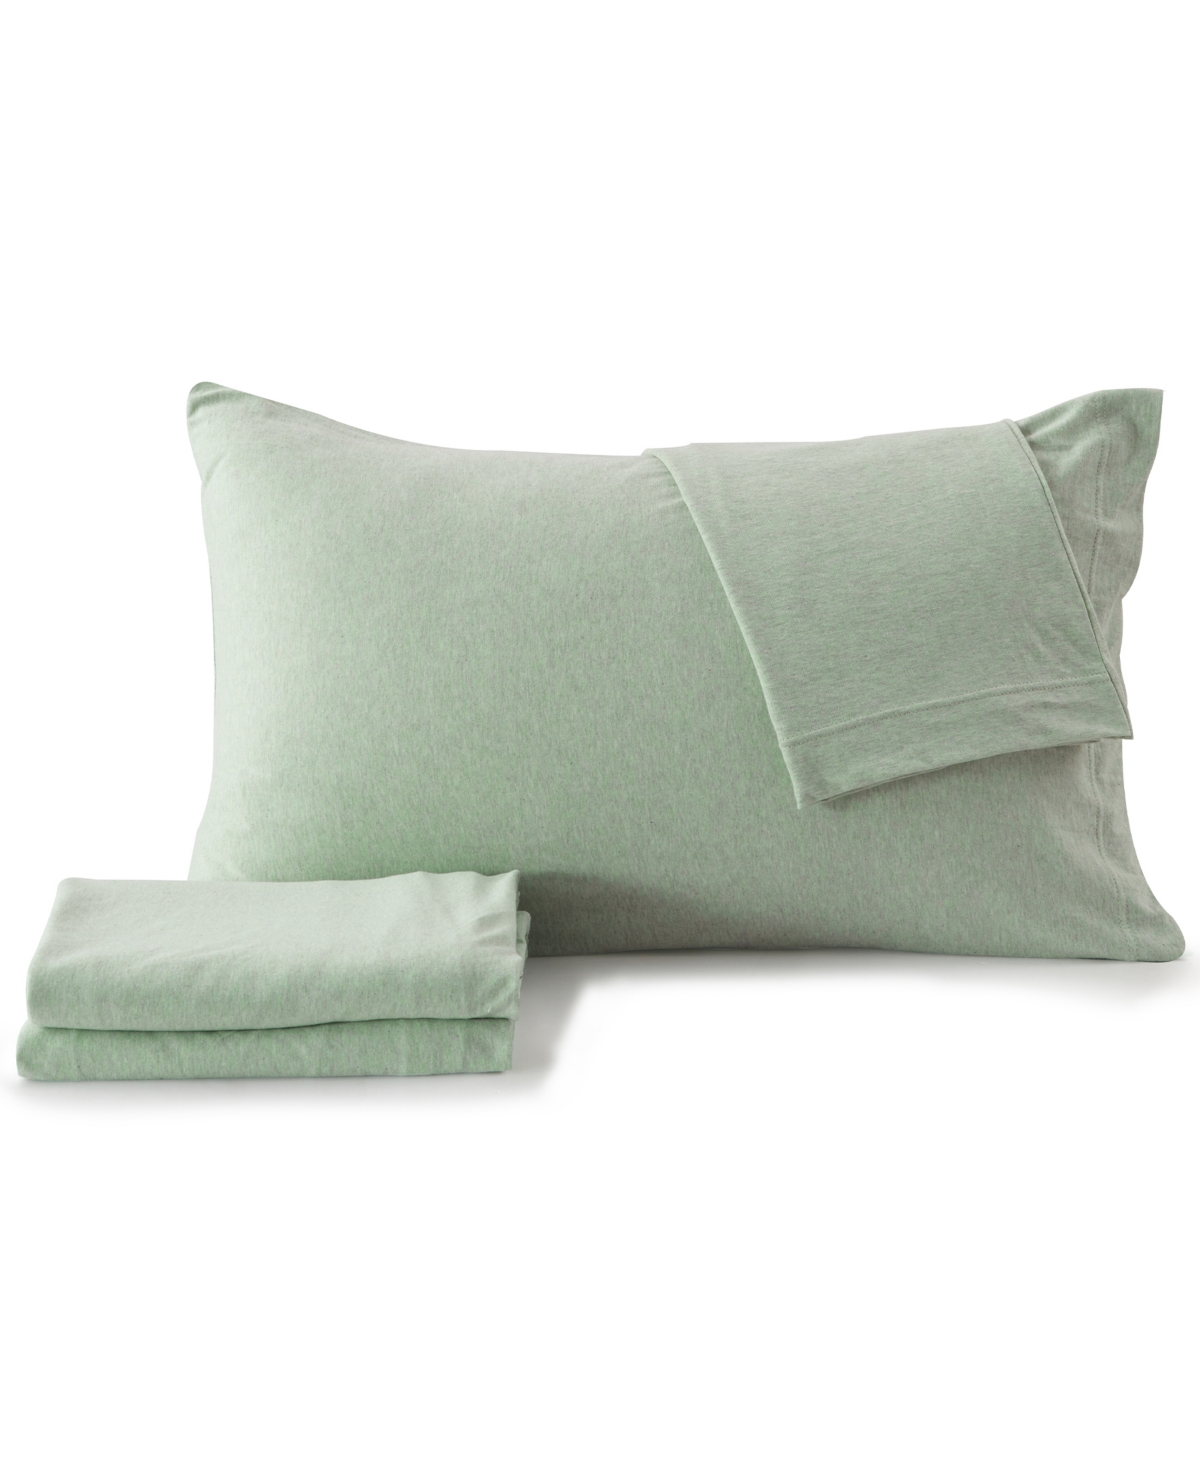 Premium Comforts Heathered Melange T-shirt Jersey Knit Cotton Blend 3 Piece Sheet Set, Twin In Green